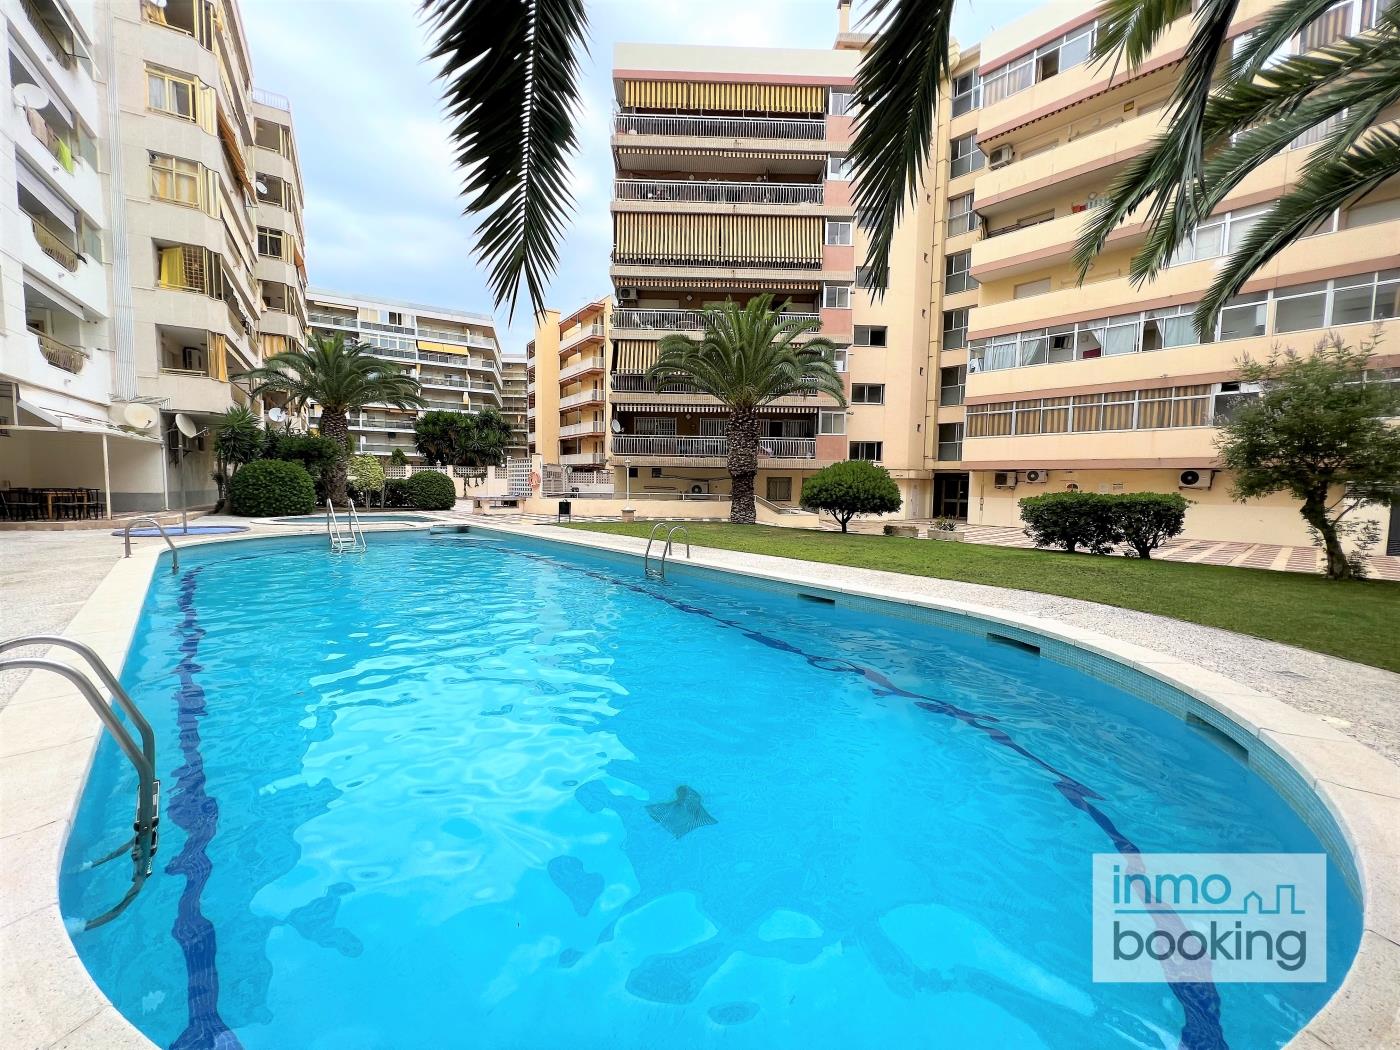 Indasol Apartments, climatizado y con piscina en Salou